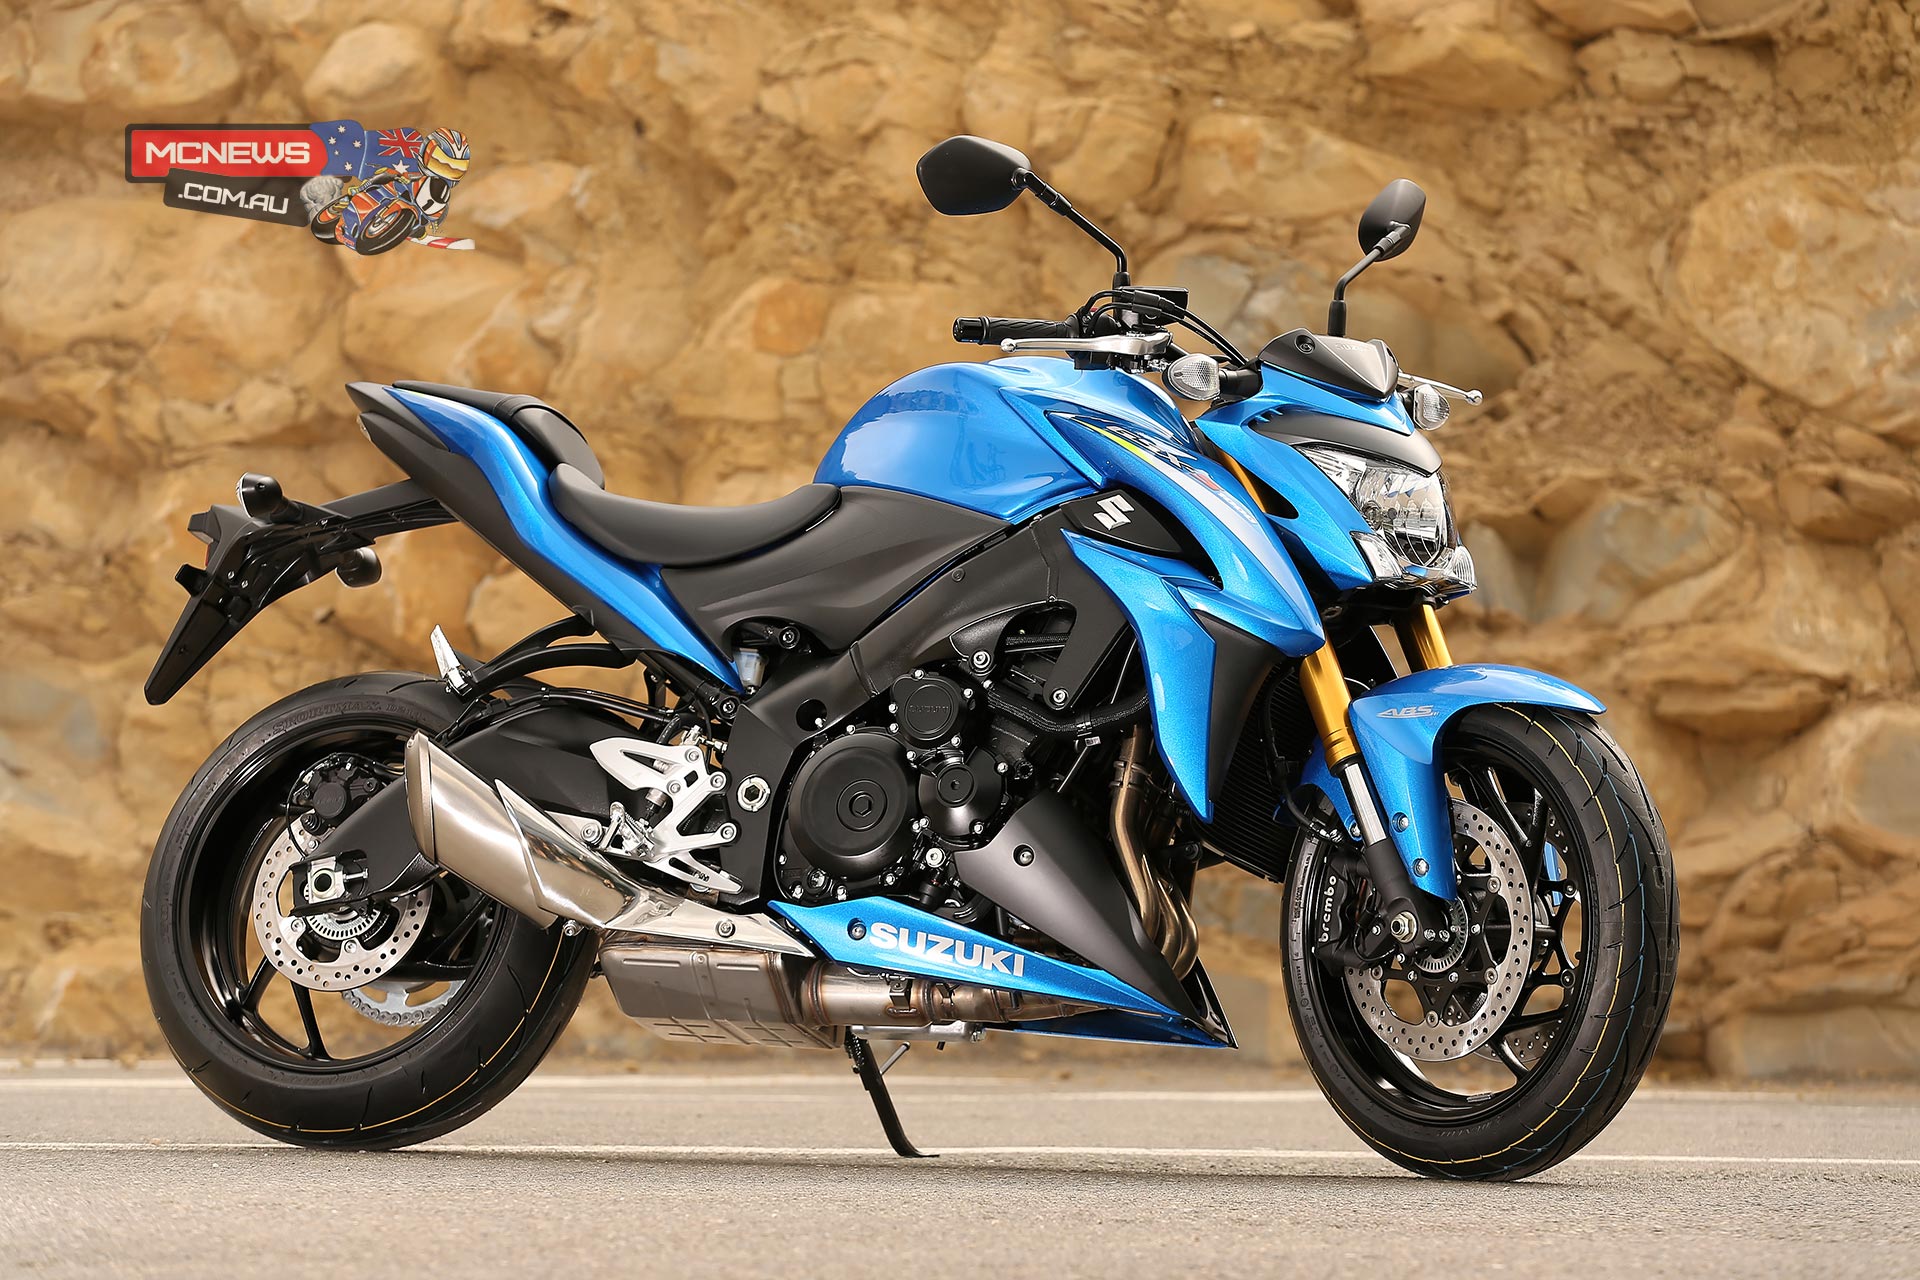 2020 Suzuki GSX-S1000 Guide • Total Motorcycle